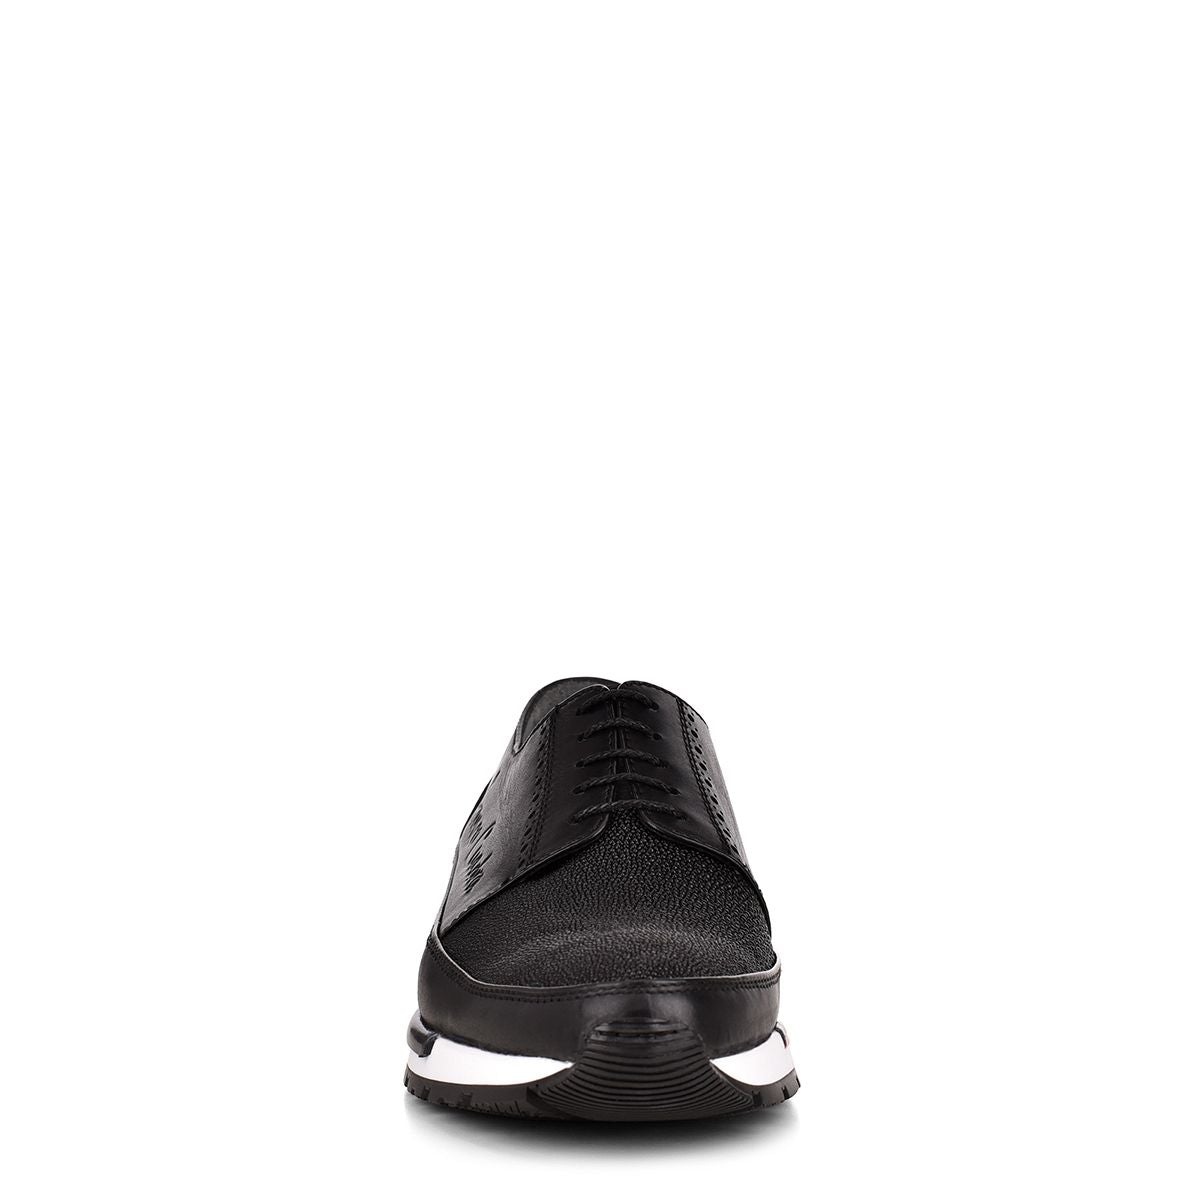 127MTTS - Cuadra black casual fashion stingray derby sneakers for men-Kuet.us